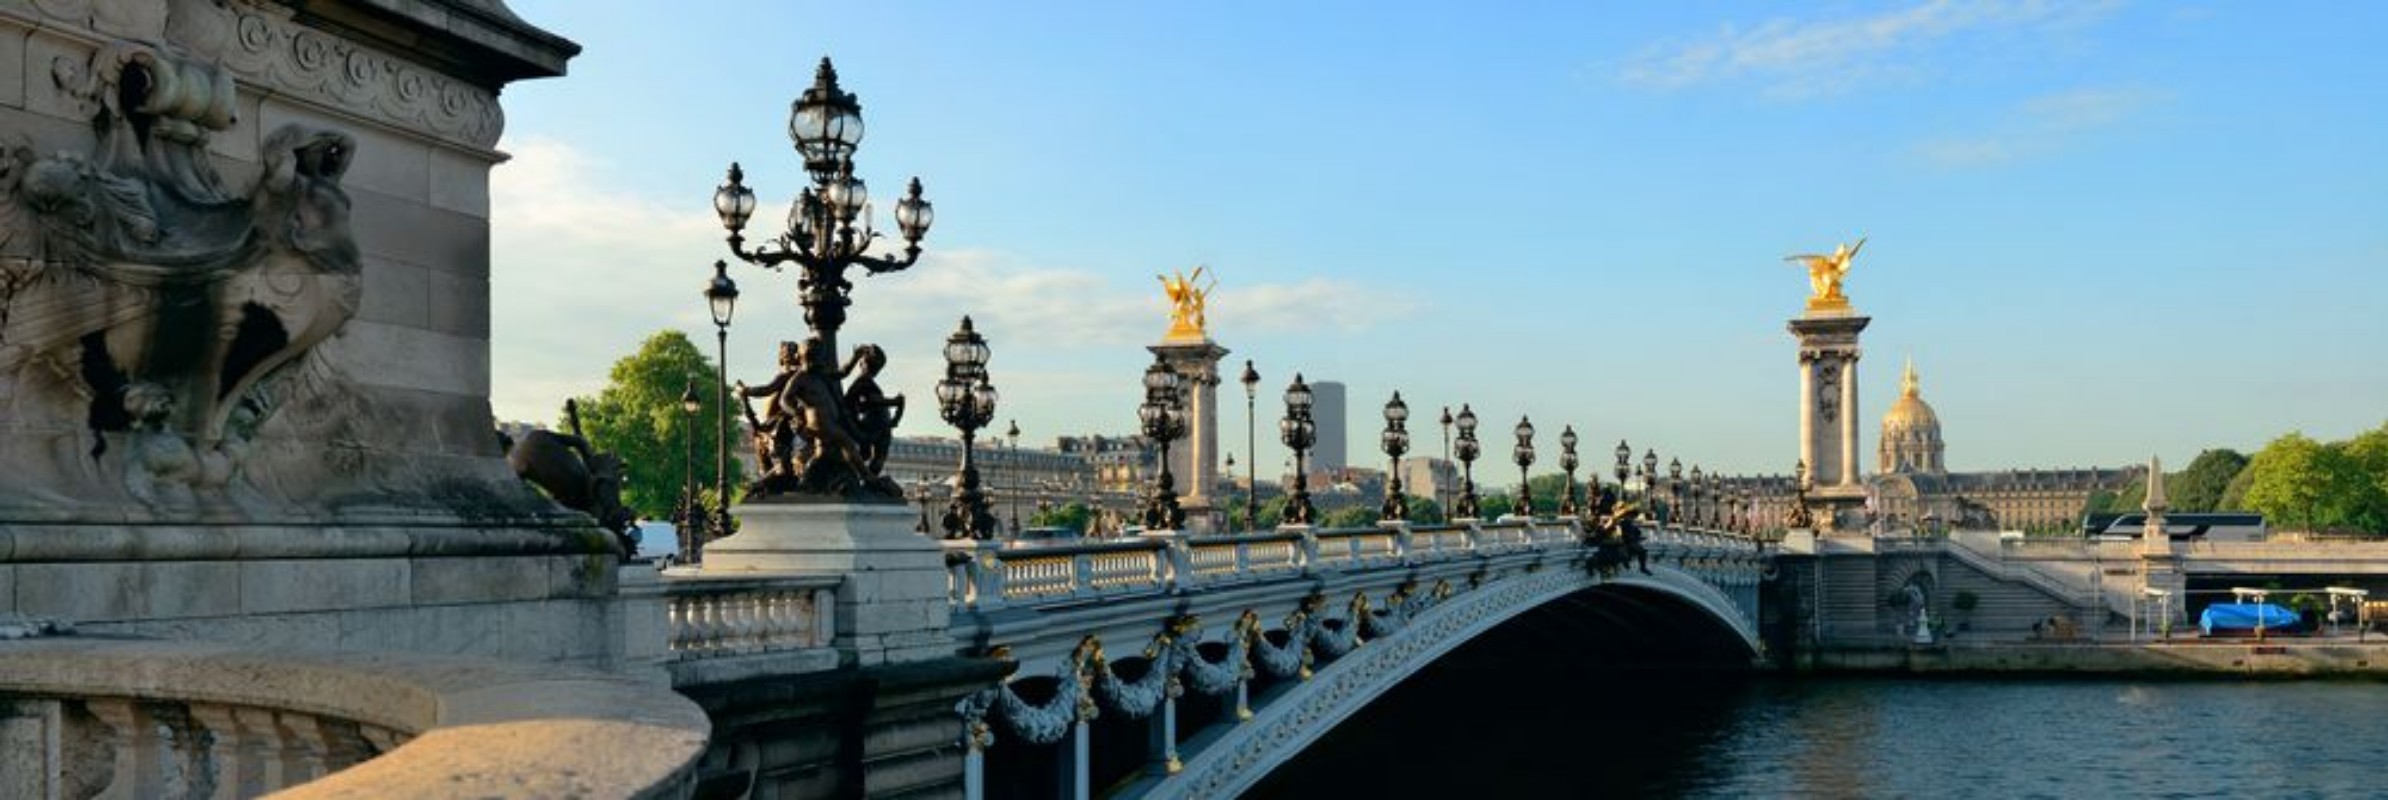 Image de Paris Alexandre III panorama